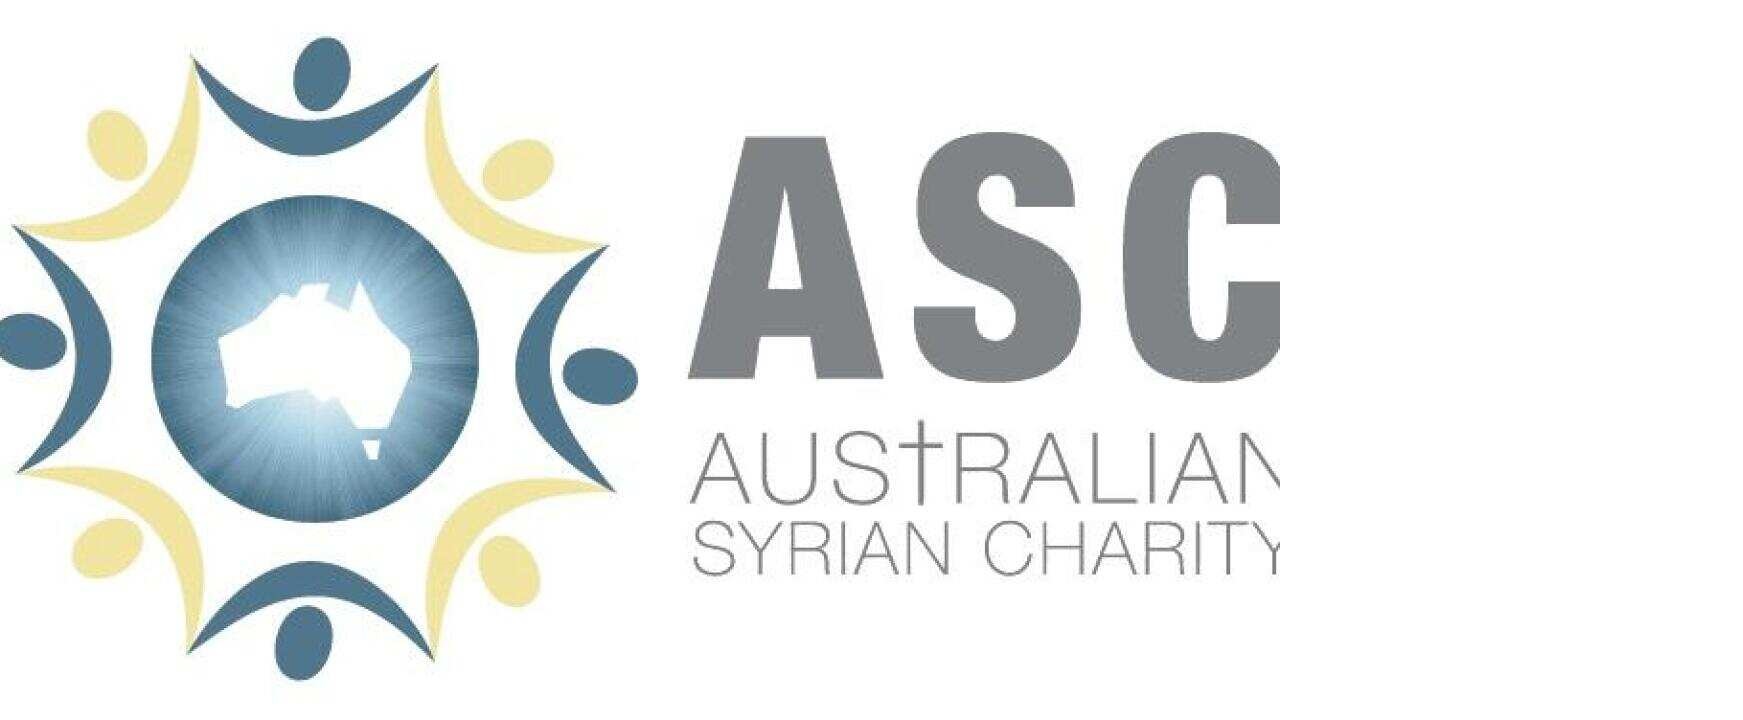 AUSTRALIAN SYRIAN CHRISTIAN ORGANISATION